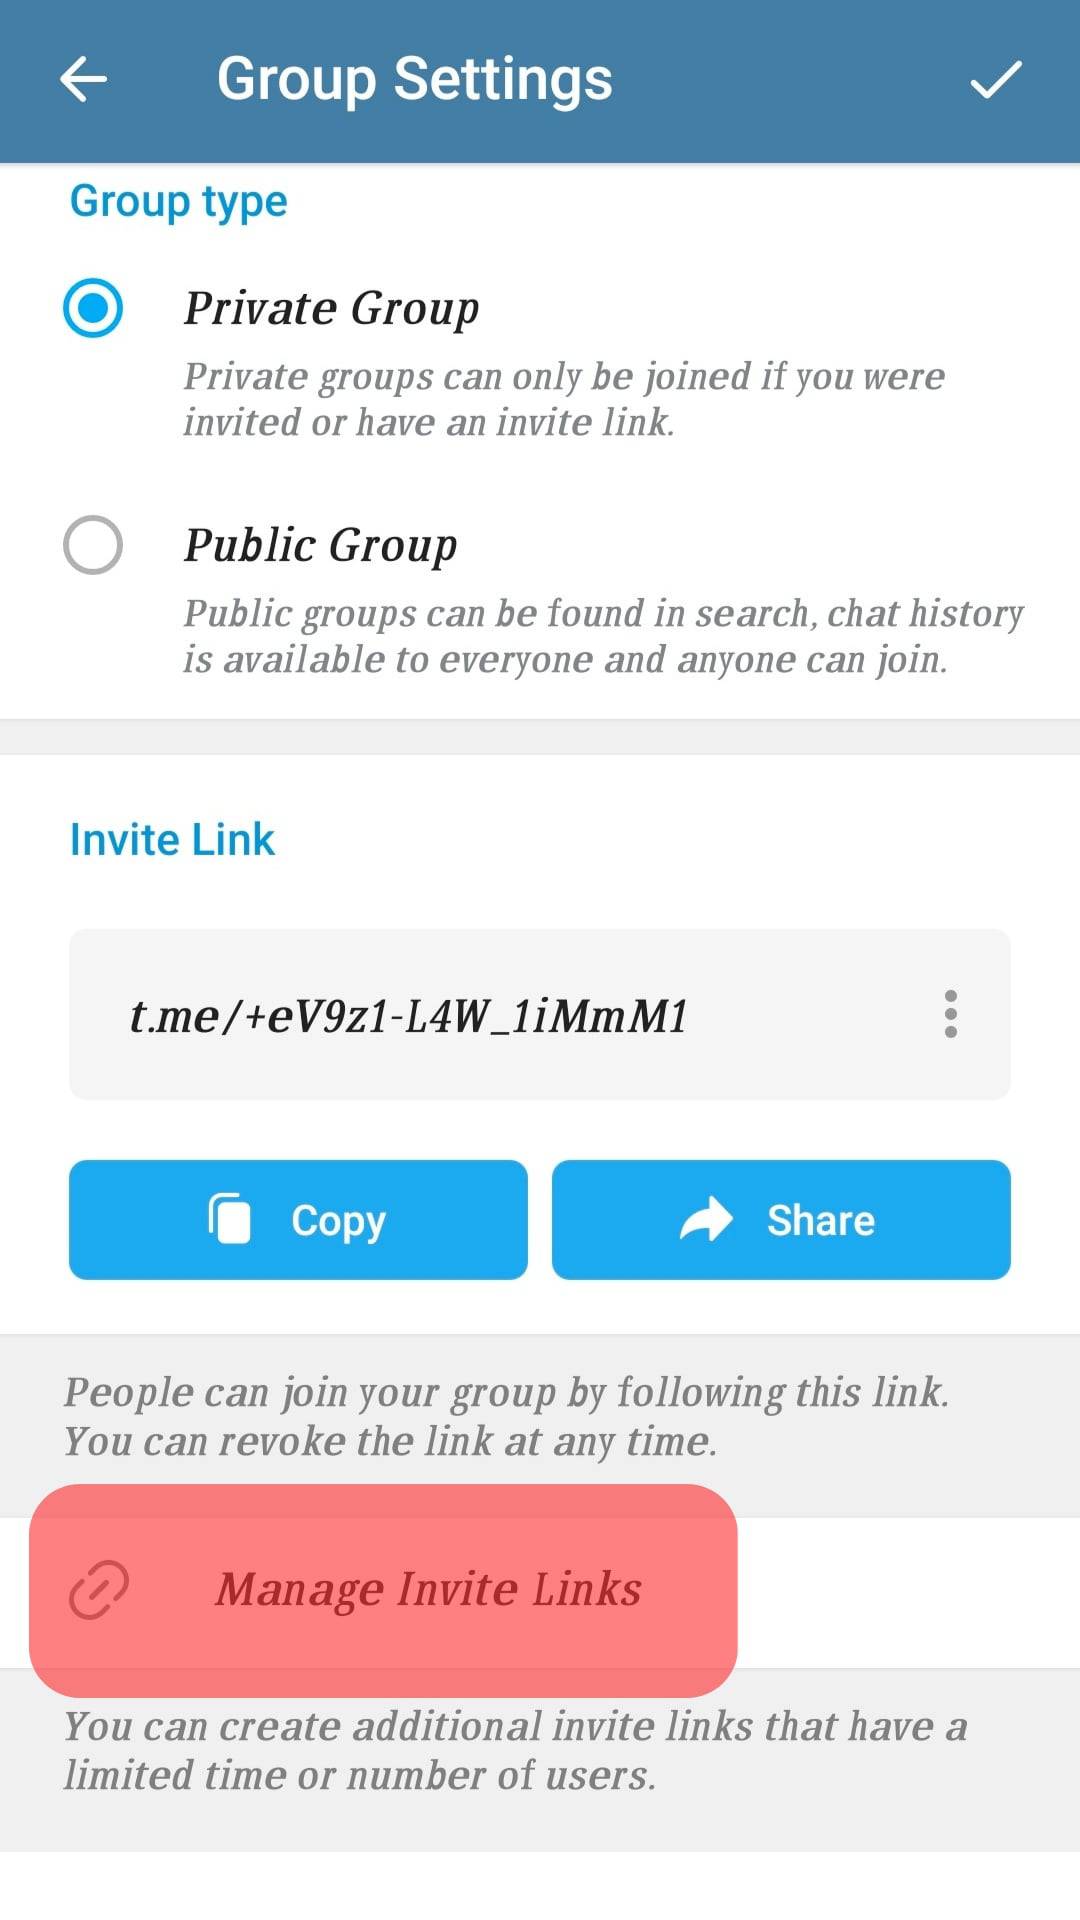 Manage Invite Links